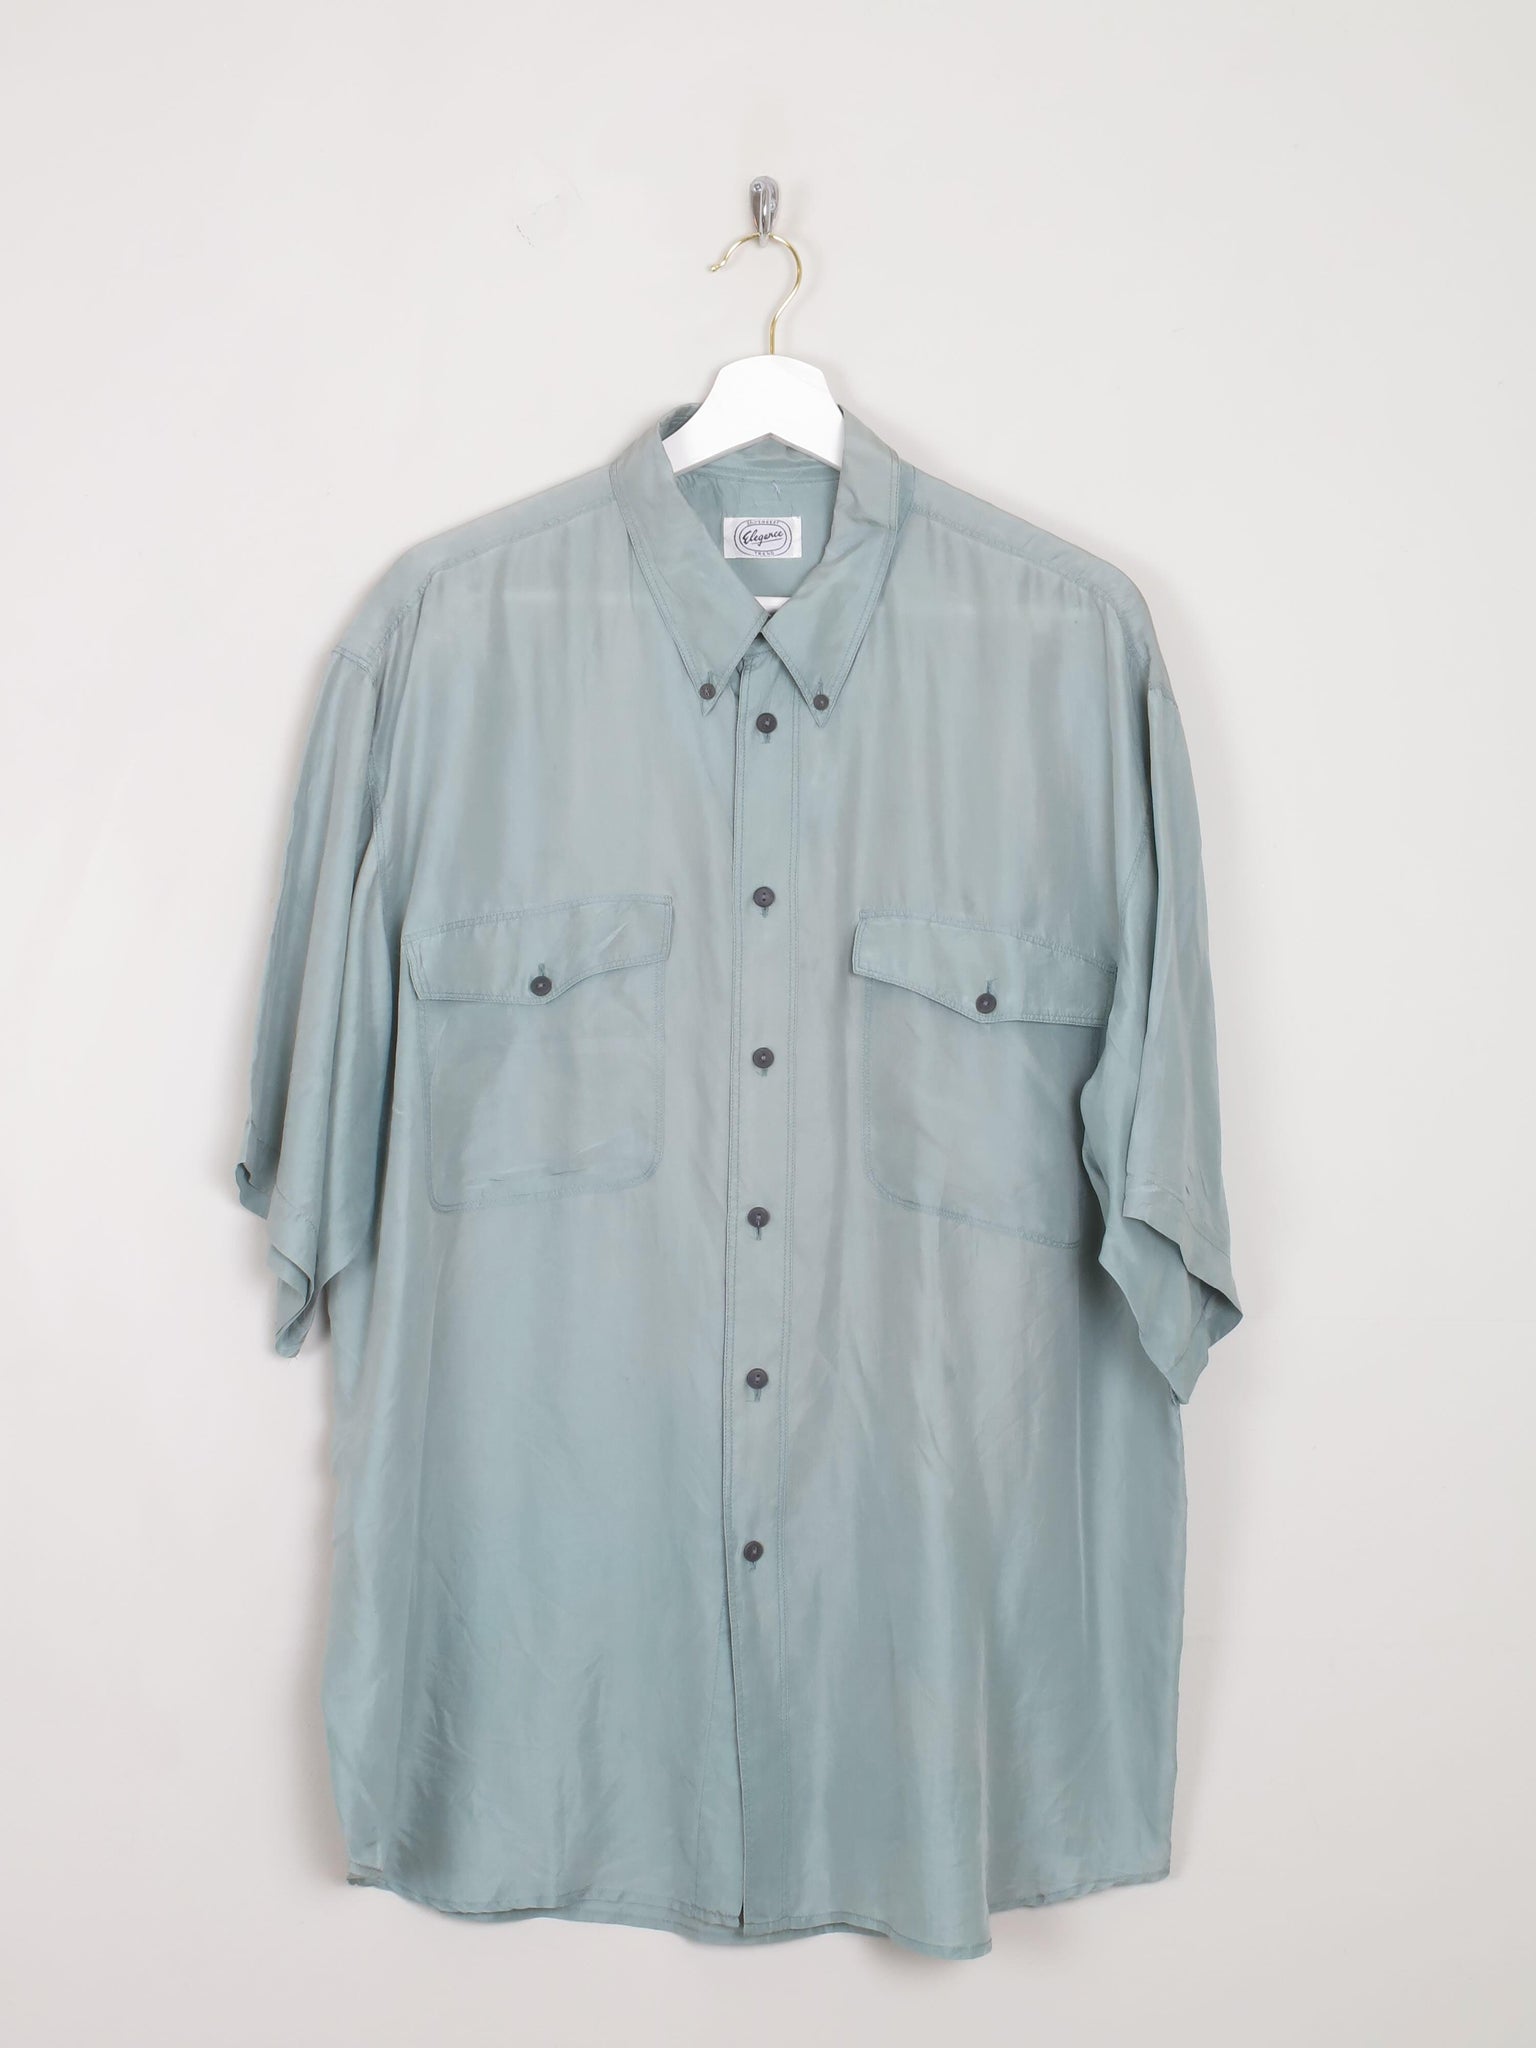 Men's Vintage Silk Shirt Sage Green L/XL - The Harlequin